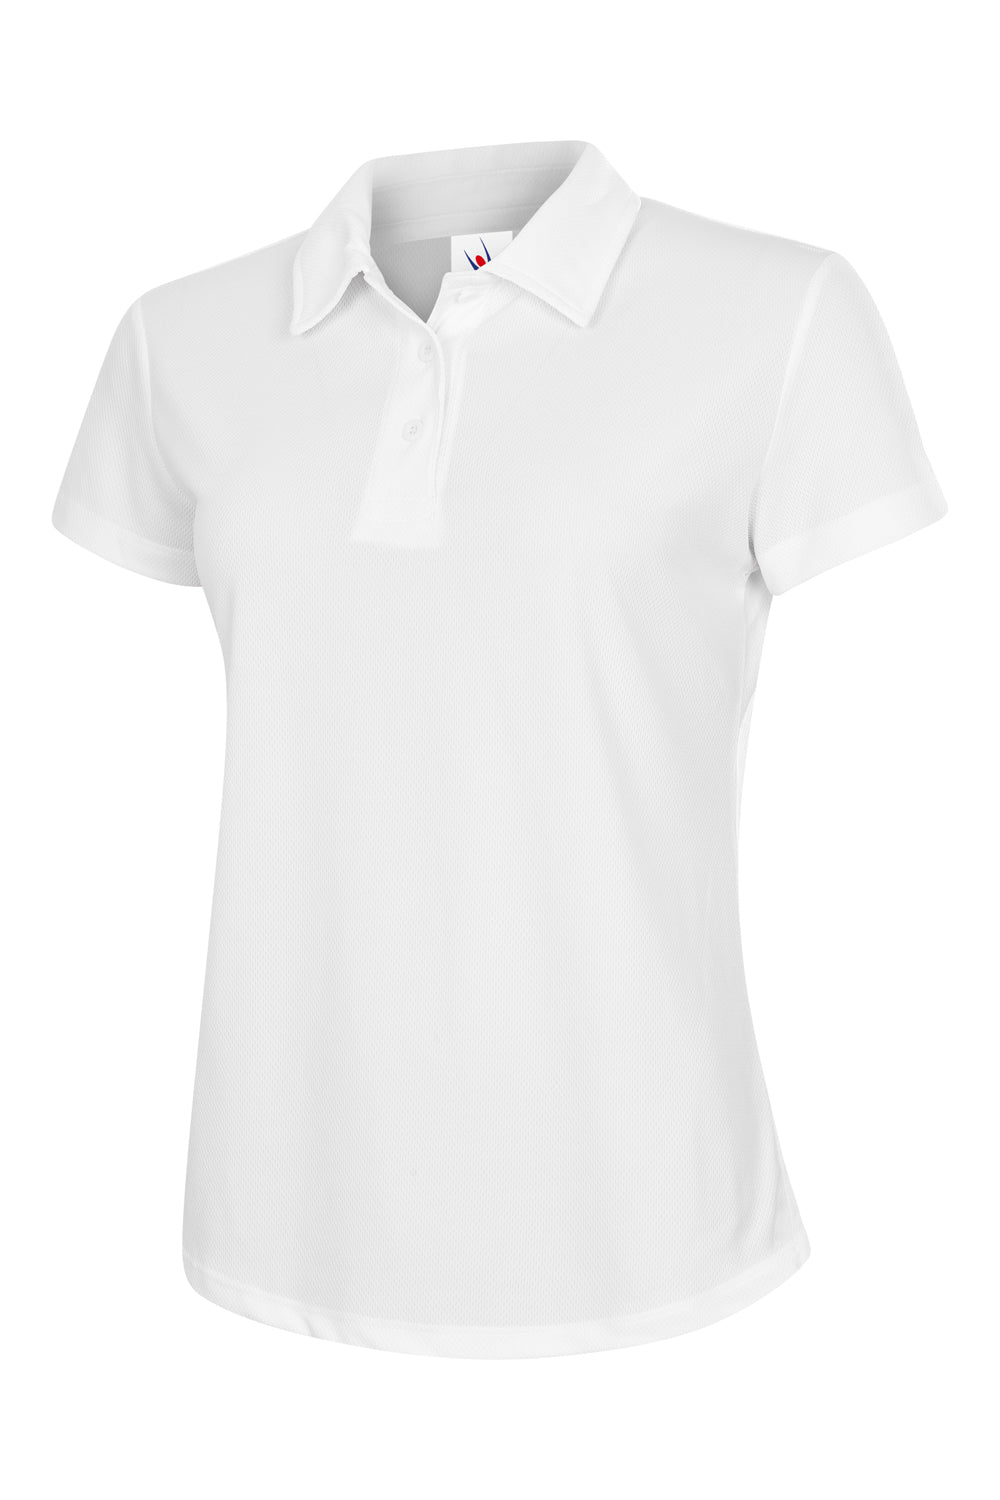 Uneek Ladies Ultra Cool Poloshirt UC126 - White